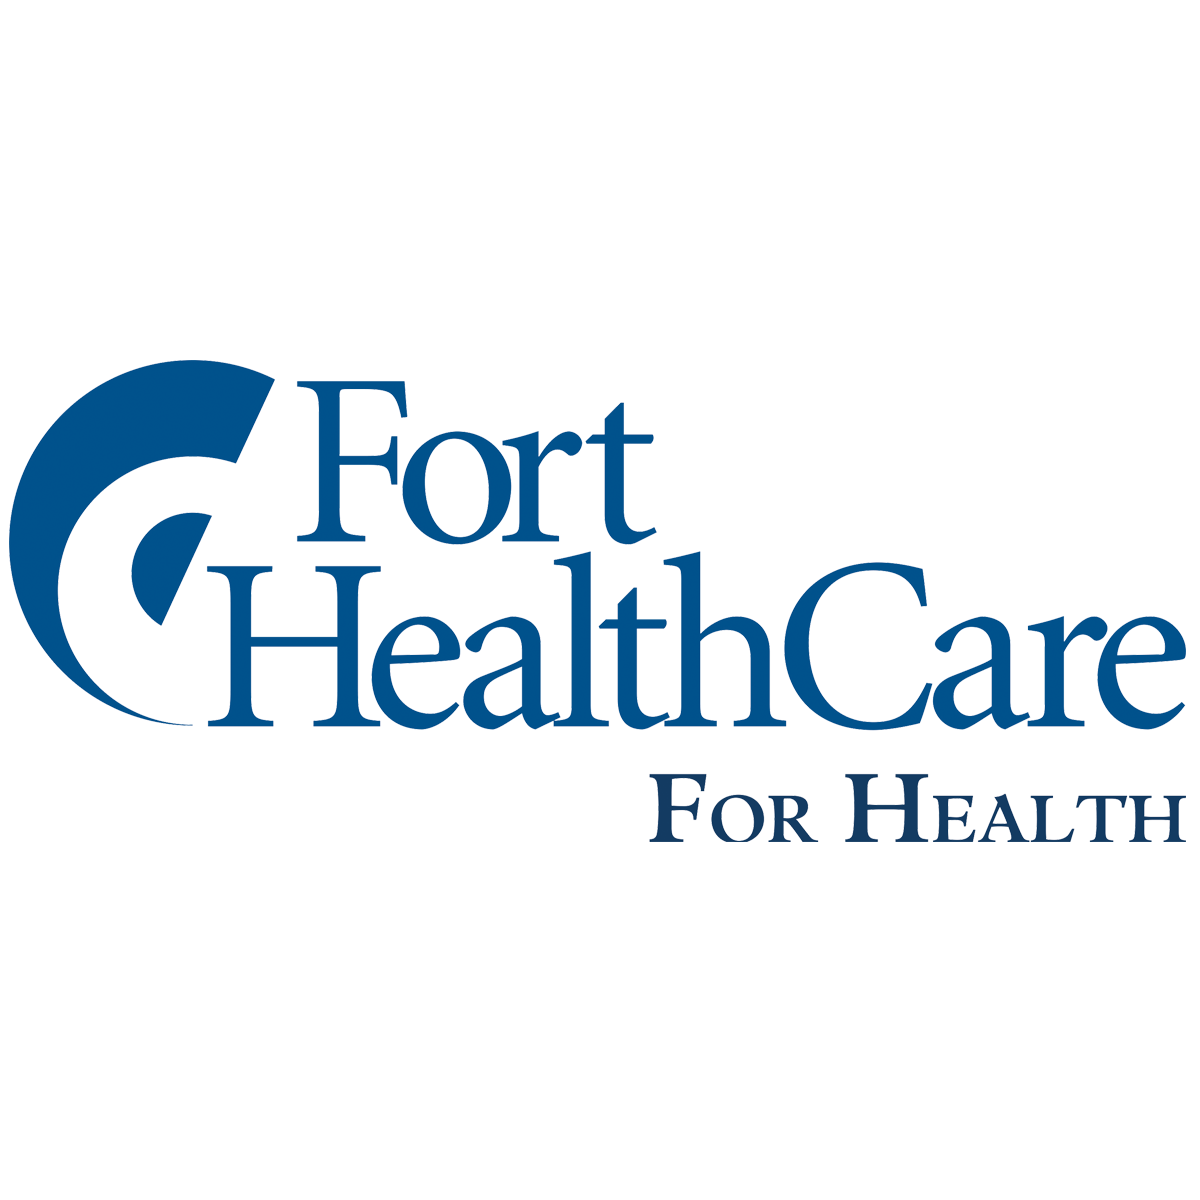 Fort HealthCare logo